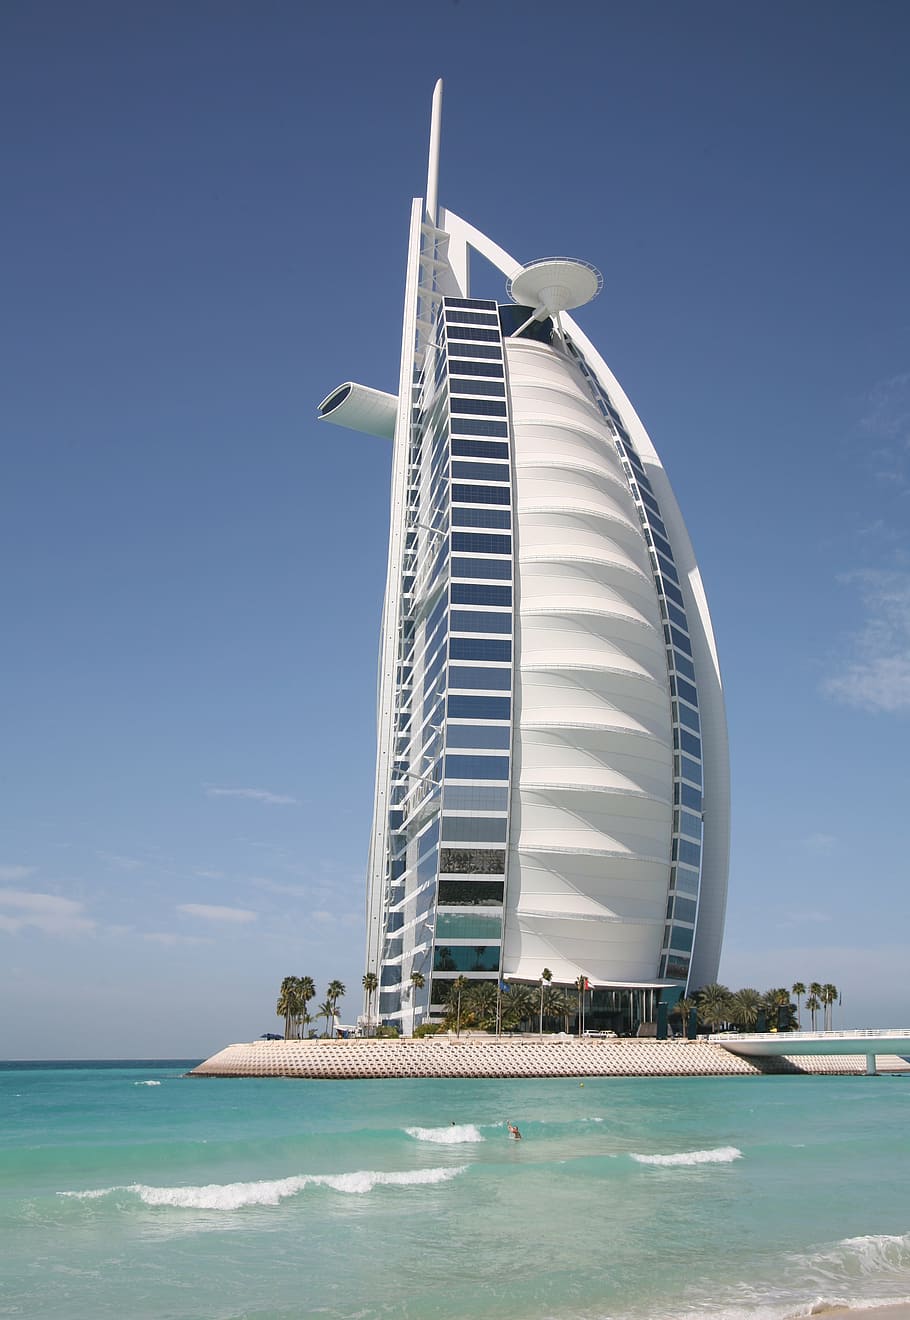 burj al arab, canvas, dubai, hotel, tourism, architecture, luxury, arabic, emirates, construction